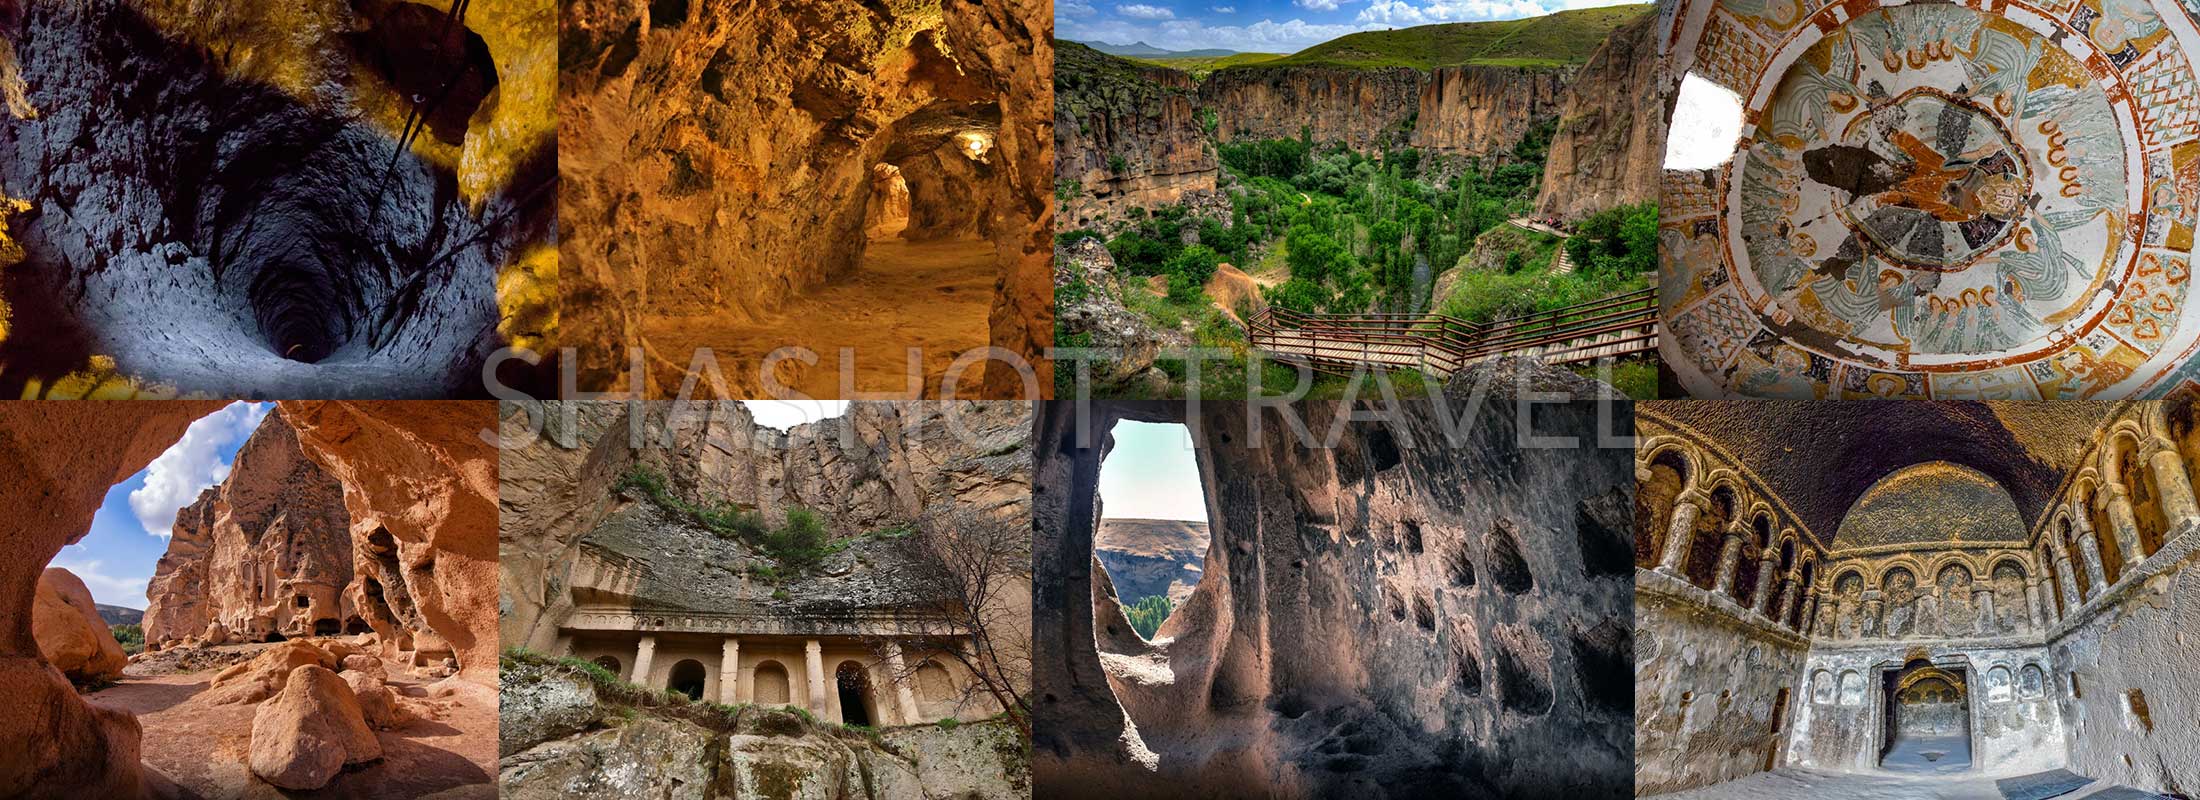 cappadocia-turkey-turkiye-shashot-travel-green-tour